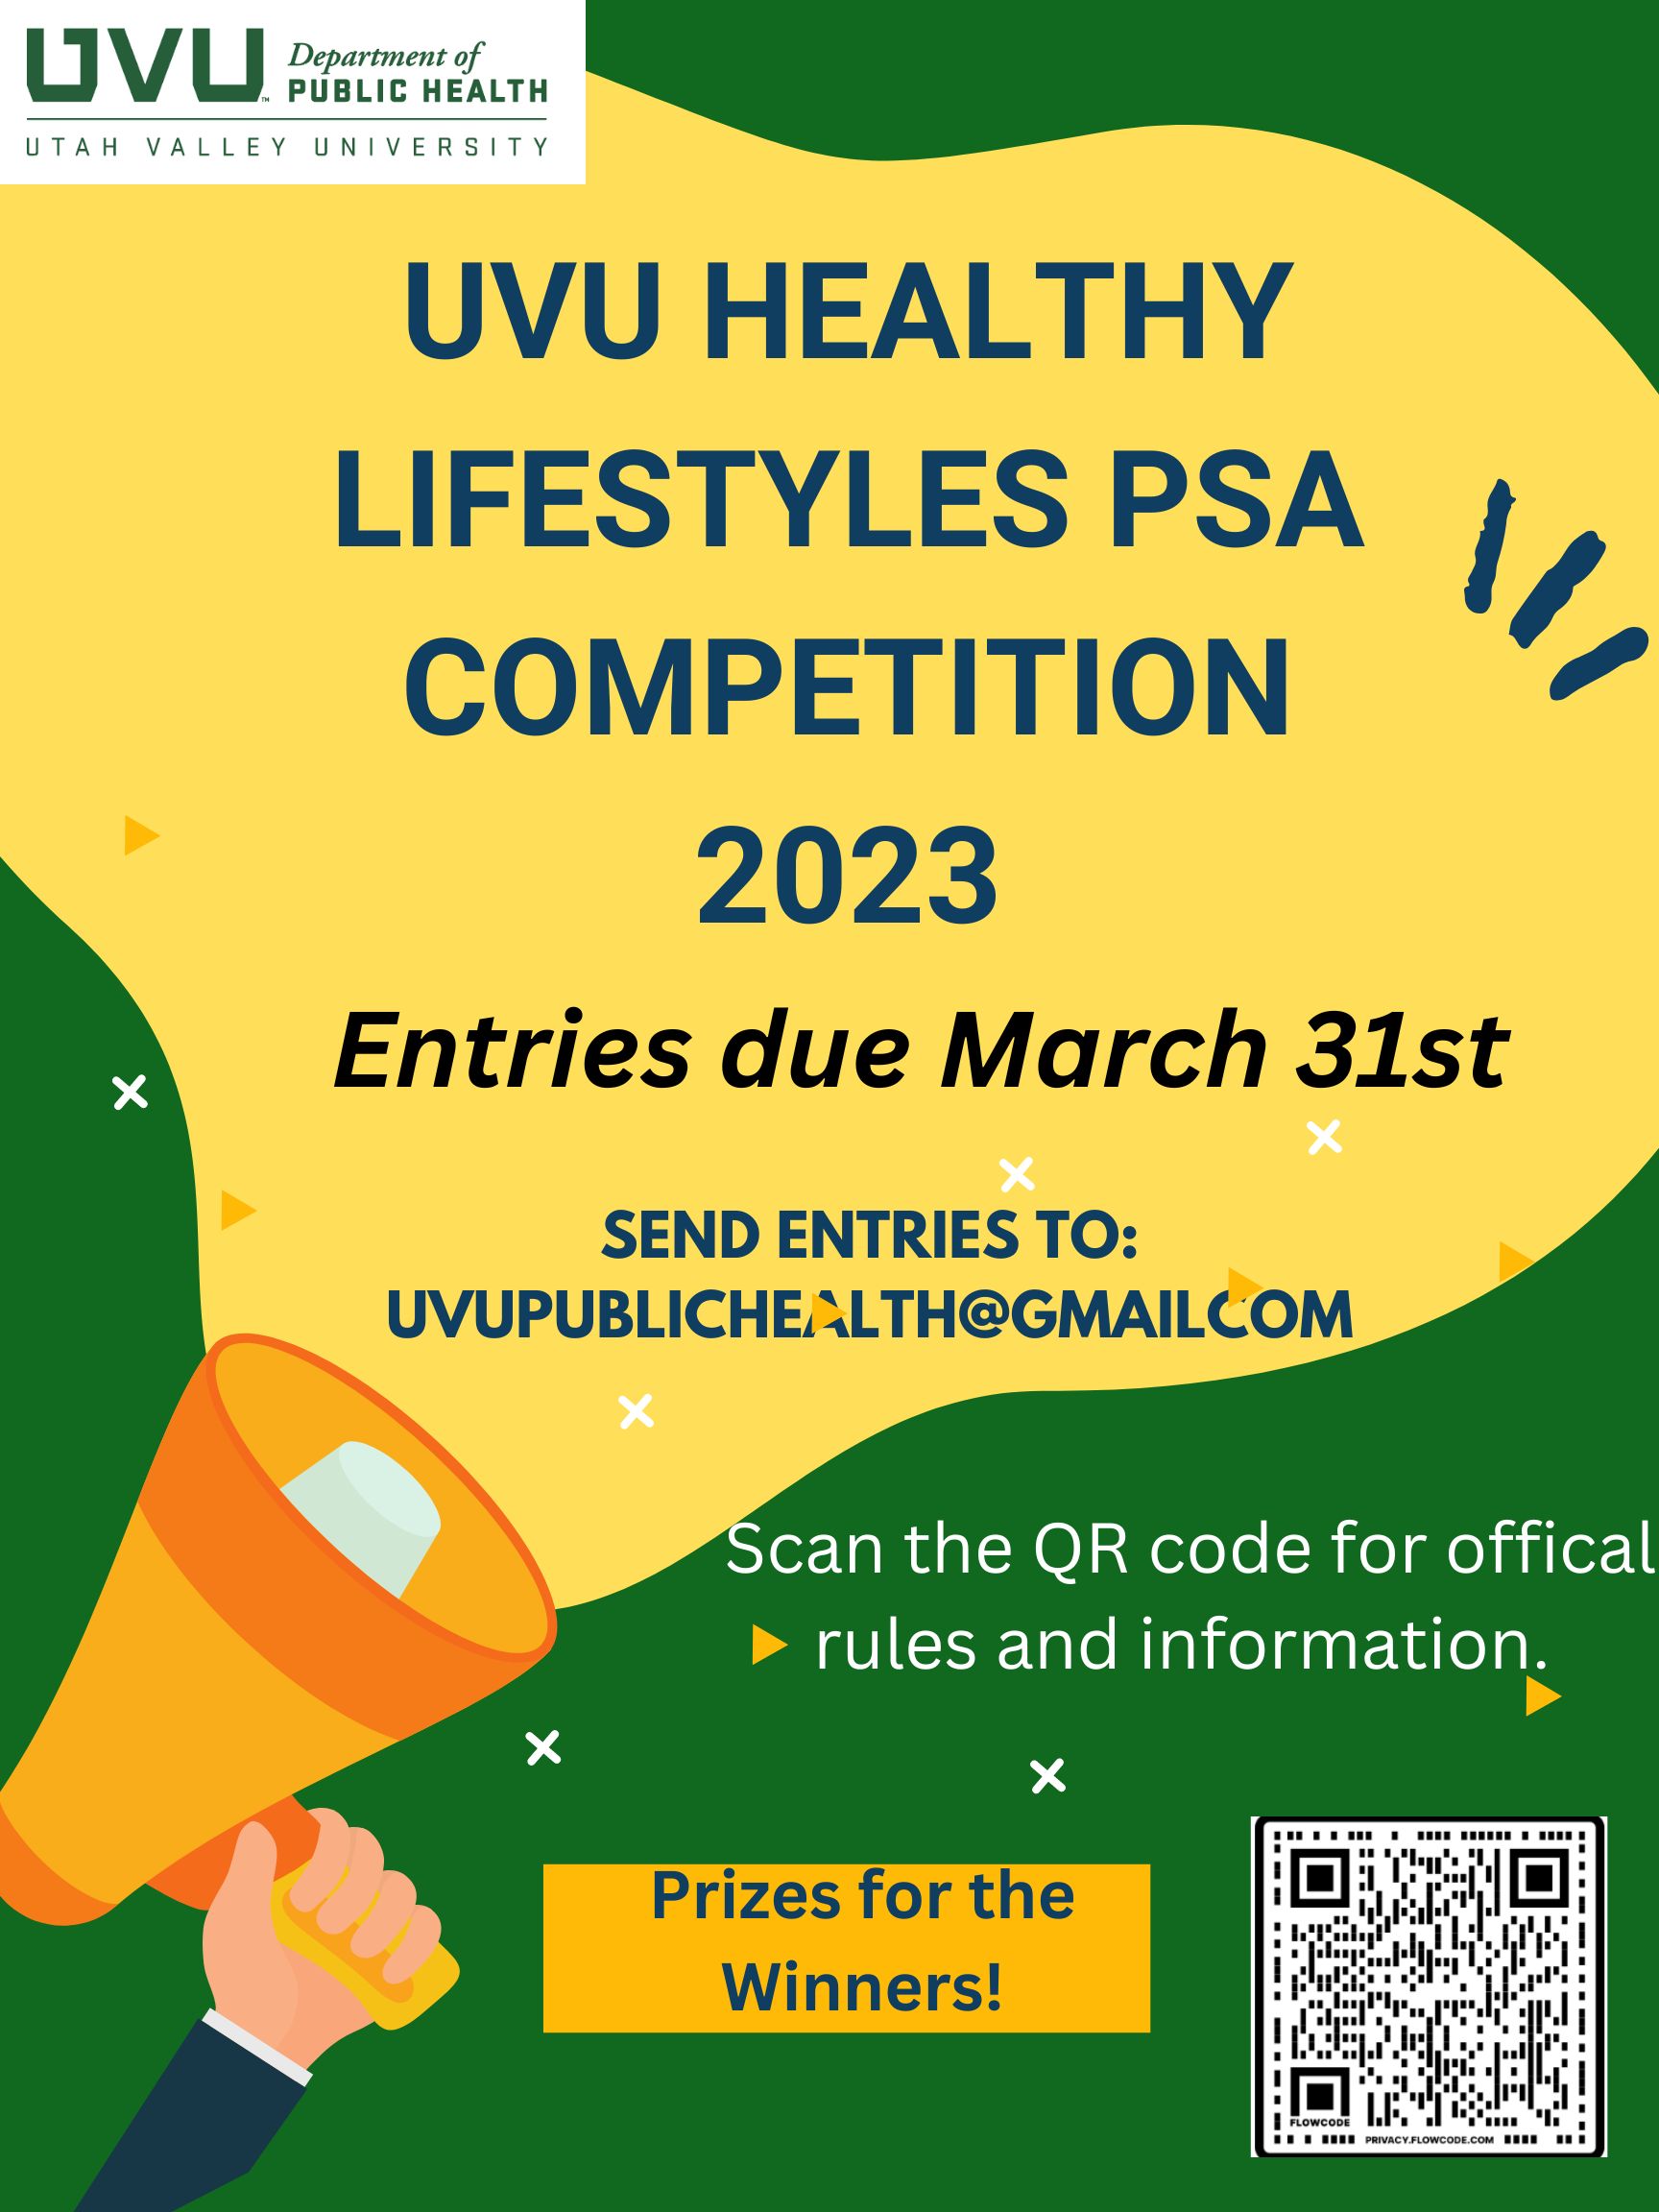 Get Involved Public Health Utah Valley University